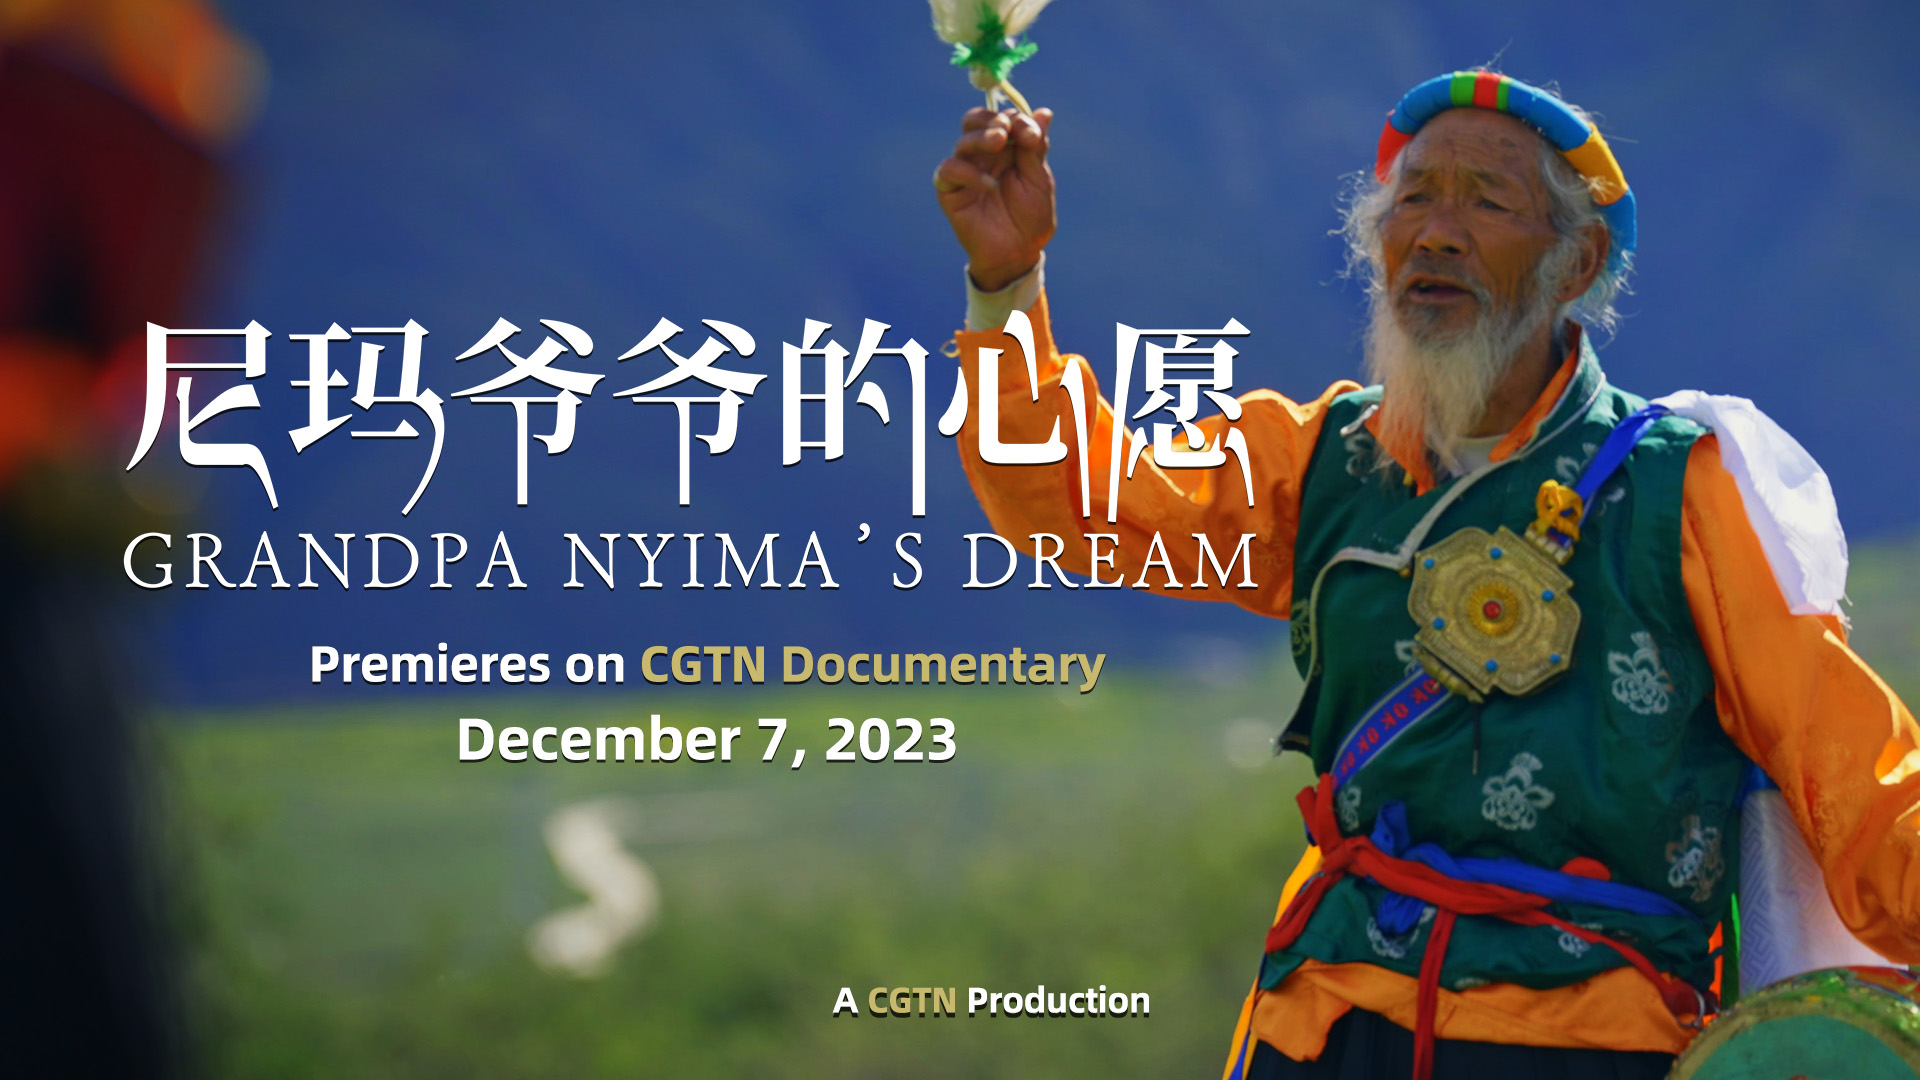 Grandpa Nyima's Dream premieres on CGTN Documentary